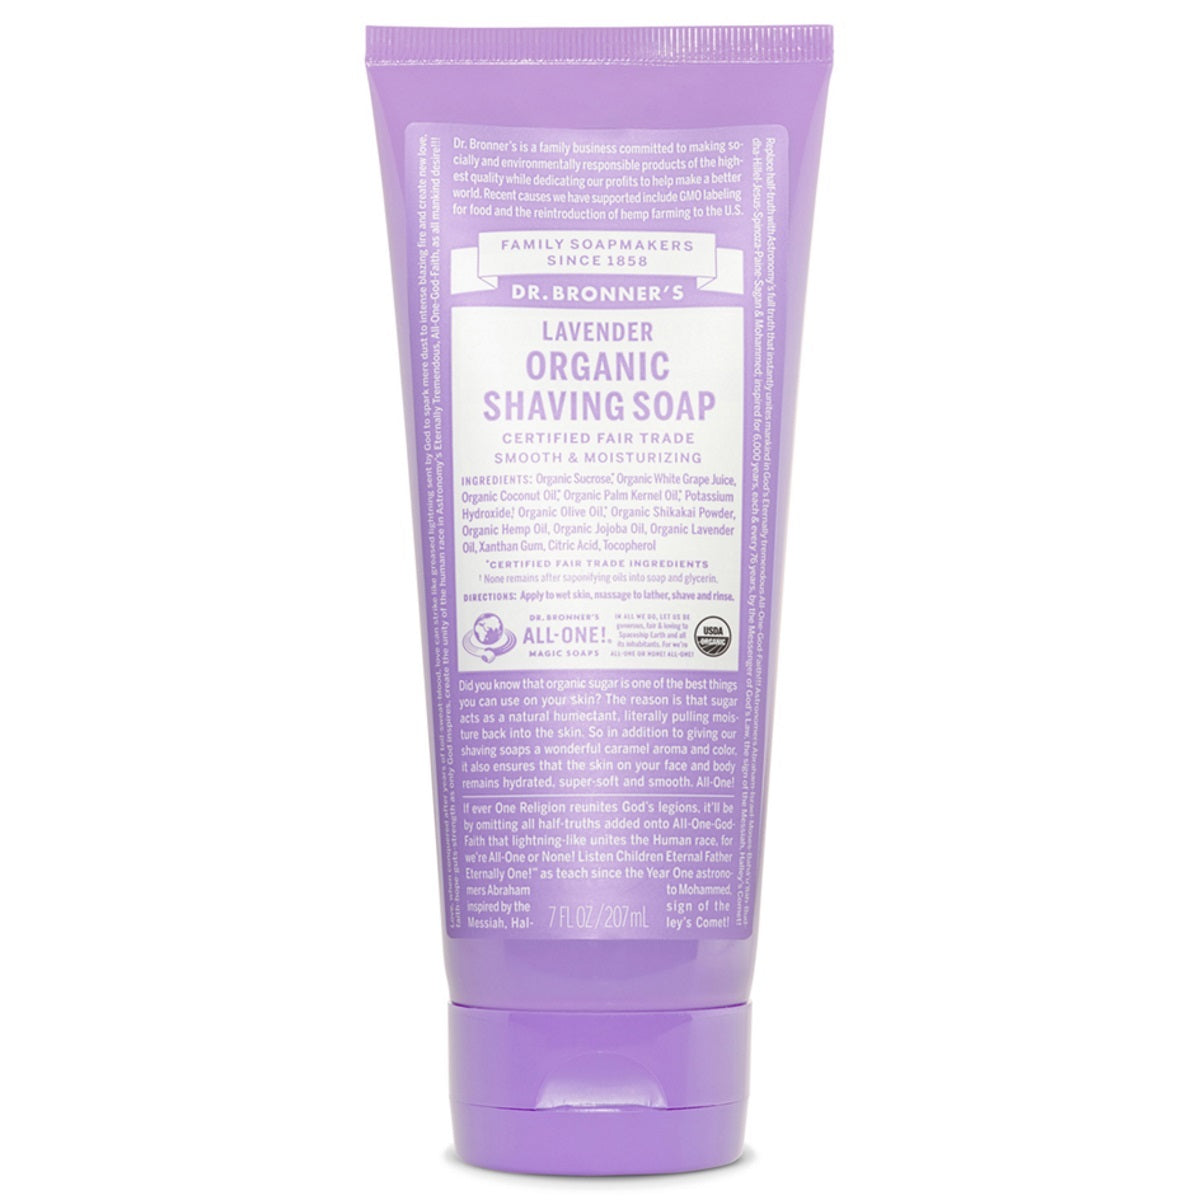 Primary image of Lavender Organic Shaving Soap